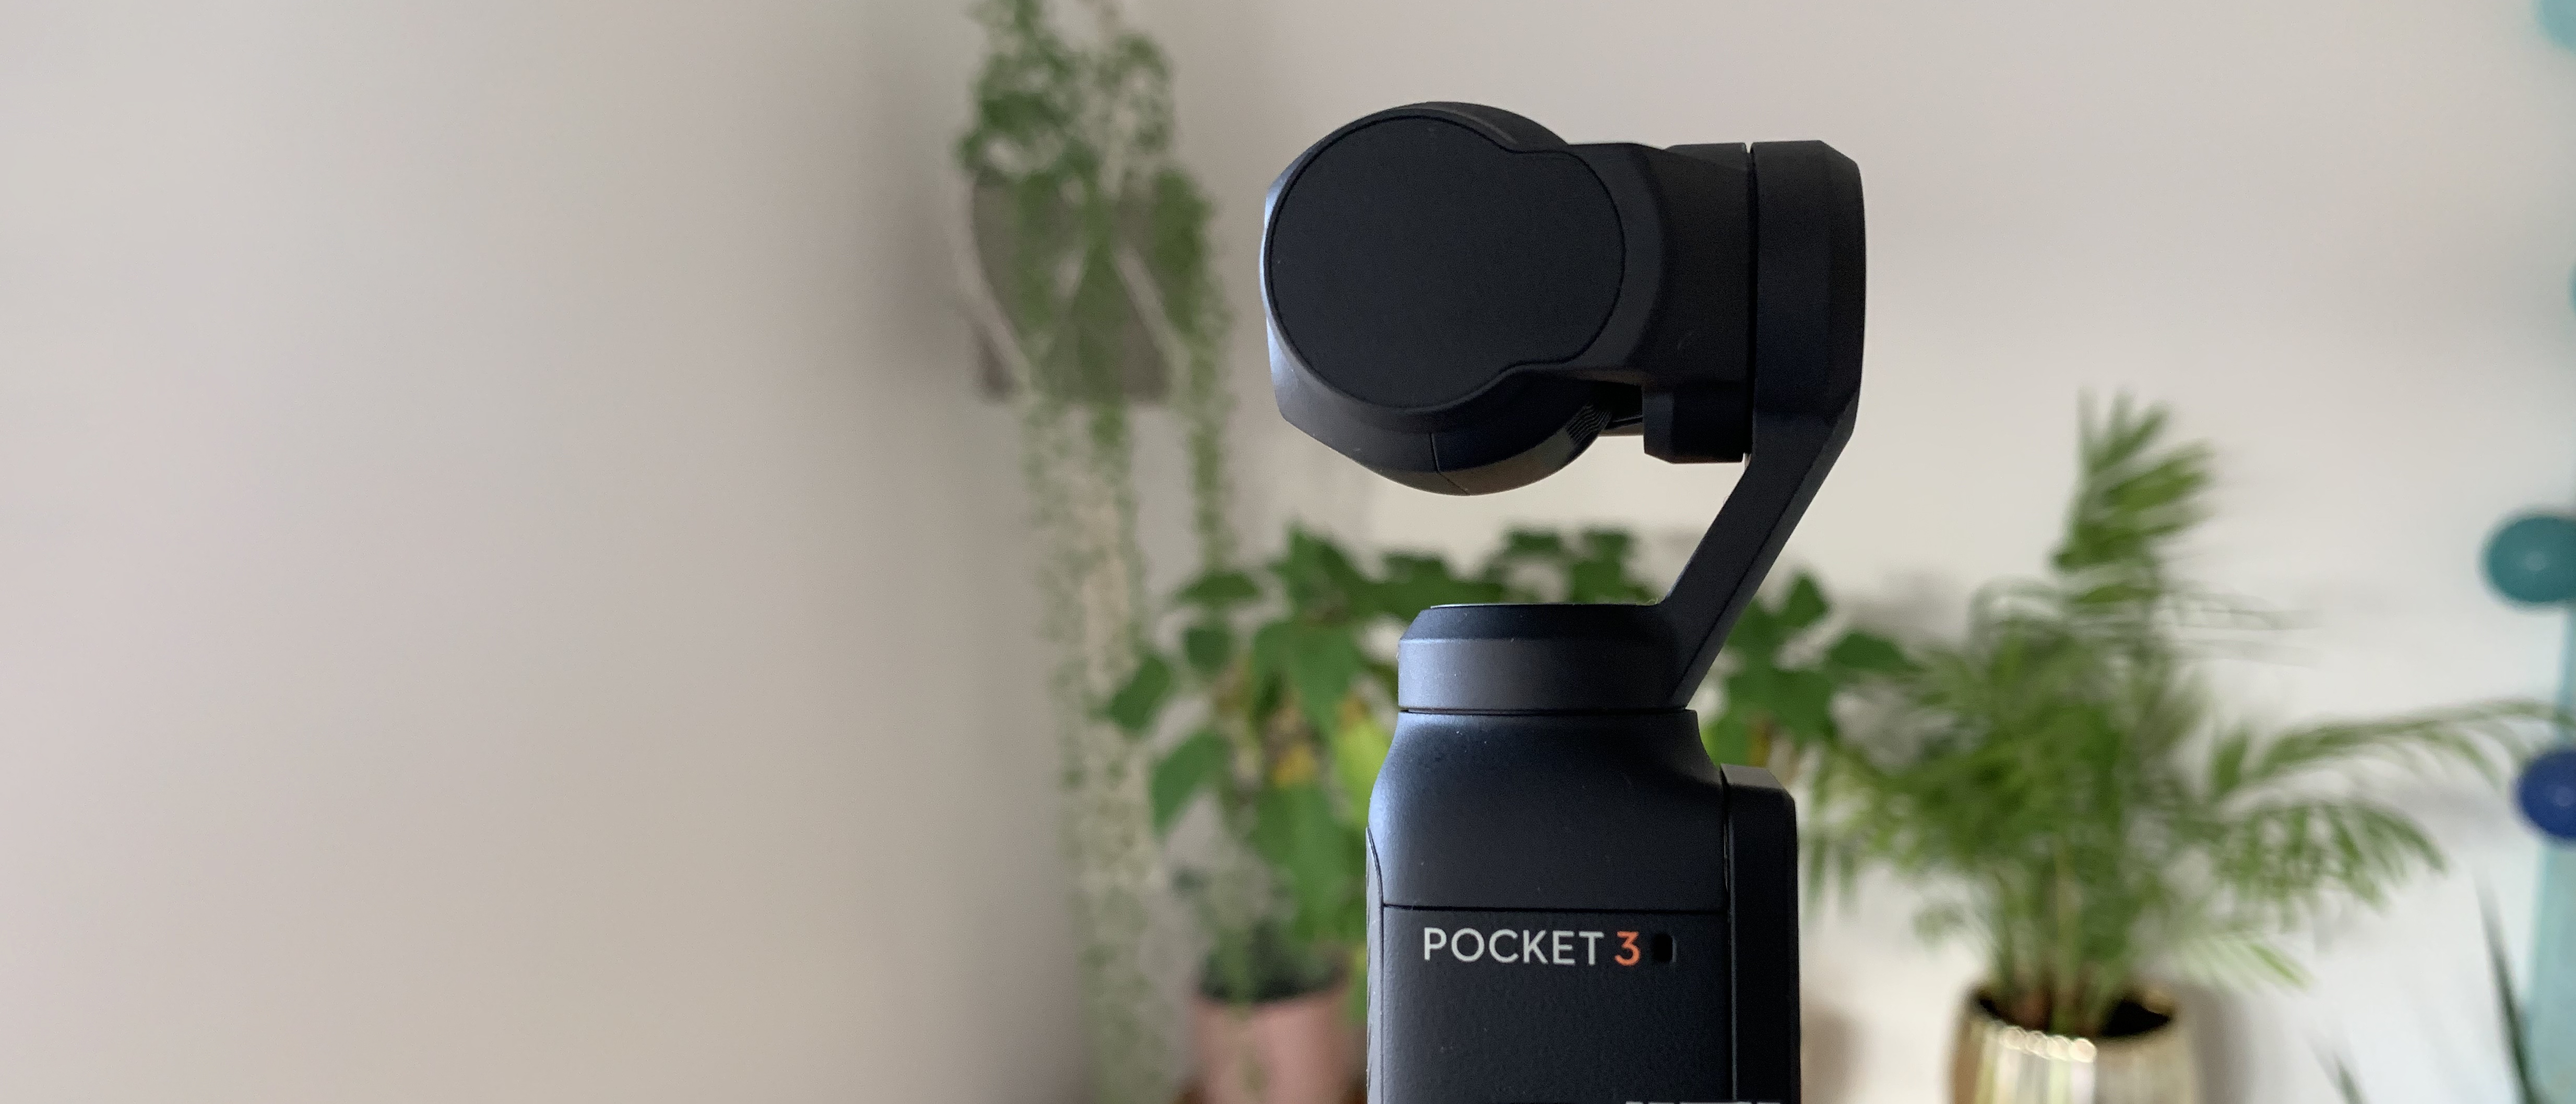 DJI Osmo Pocket Camera Gimbal: Price, Specs, Release Date